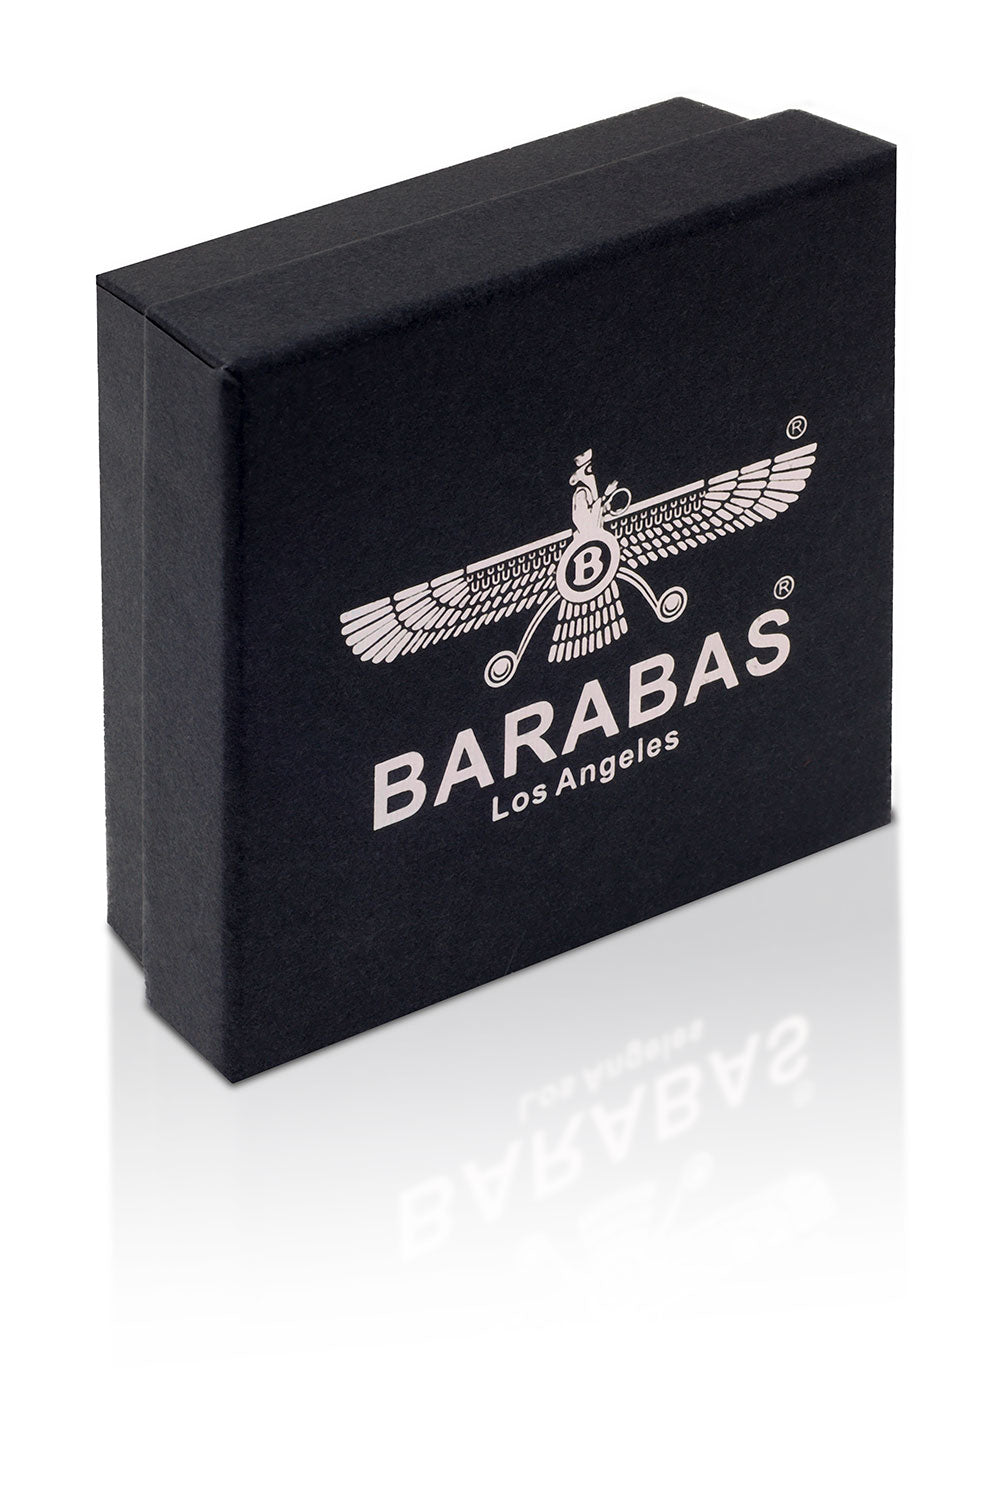 Barabas Unisex Stainless Steel Patterned Cross Pendant Necklace 4NK01 Black